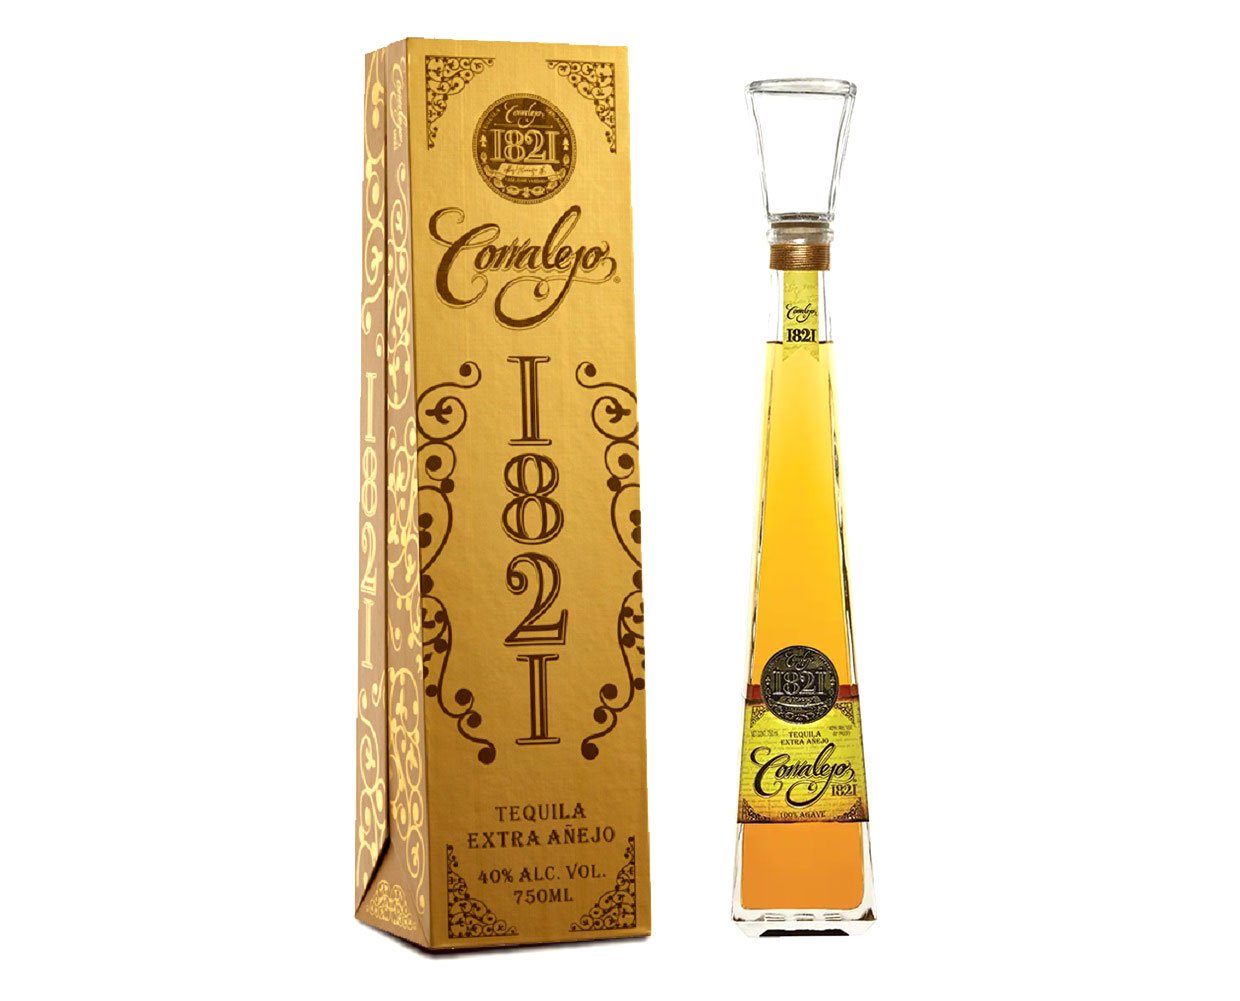 Tequila Corralejo Extra Añejo 1821